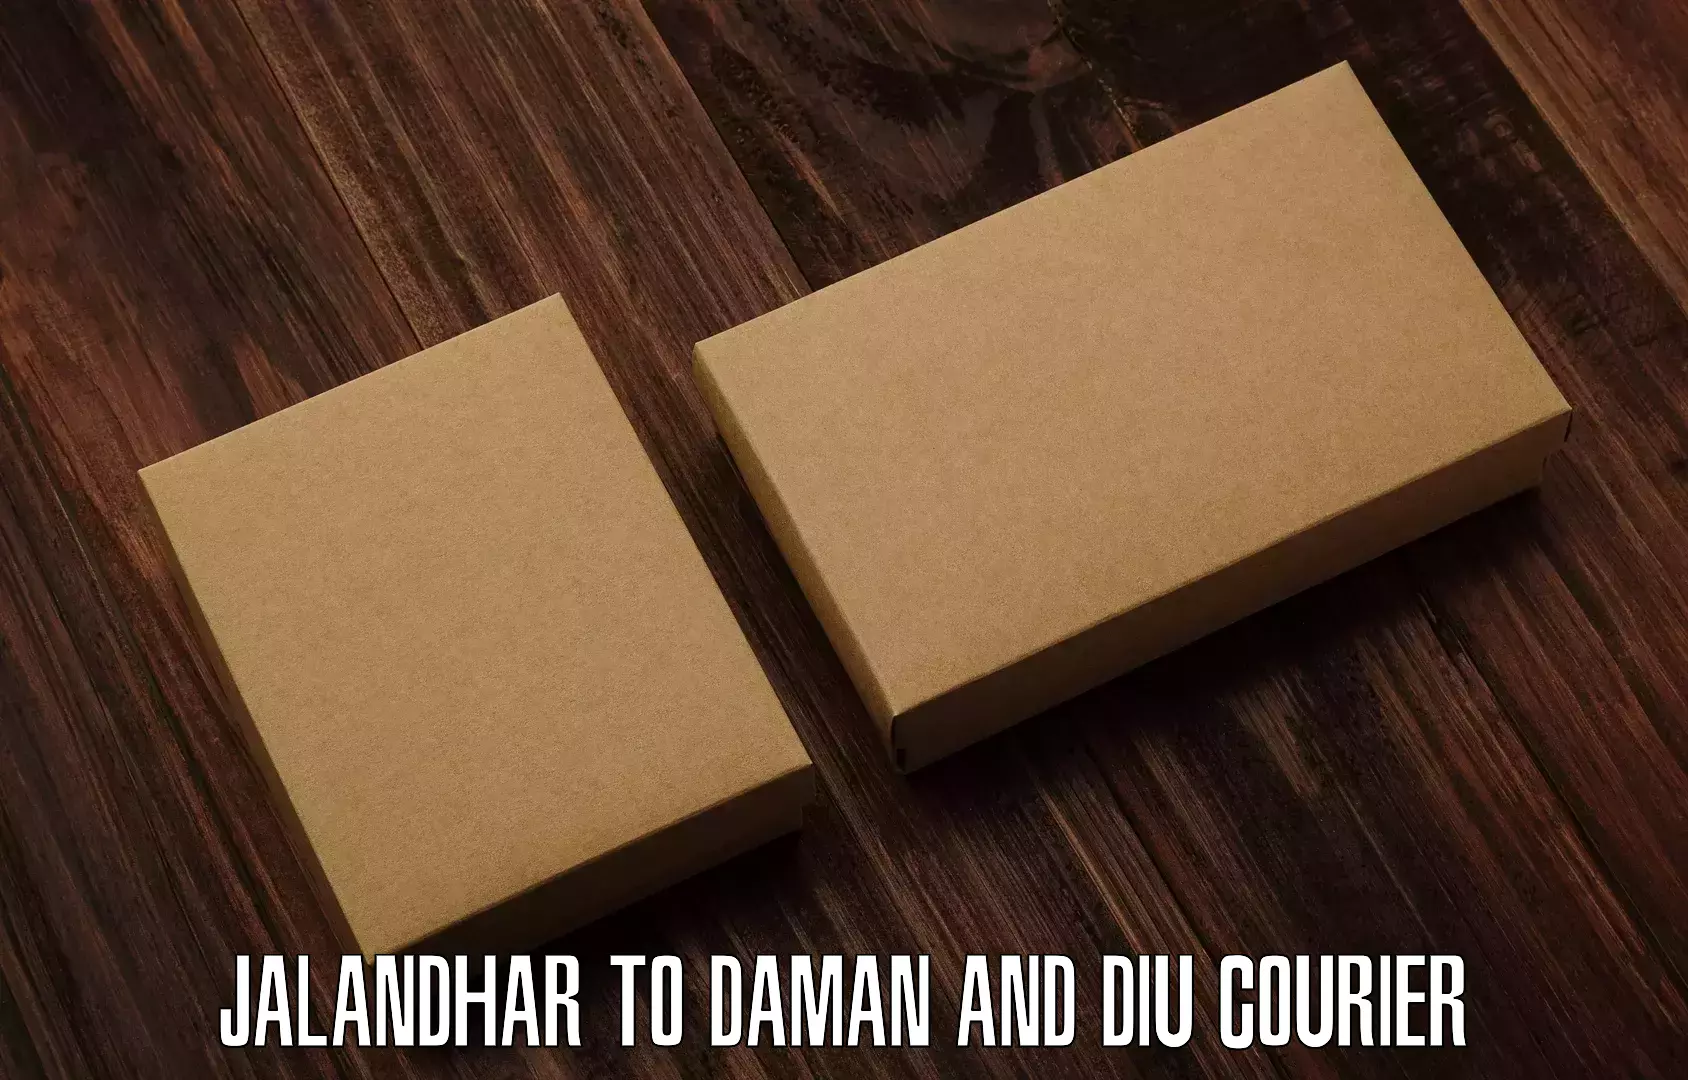 Enhanced tracking features Jalandhar to Diu